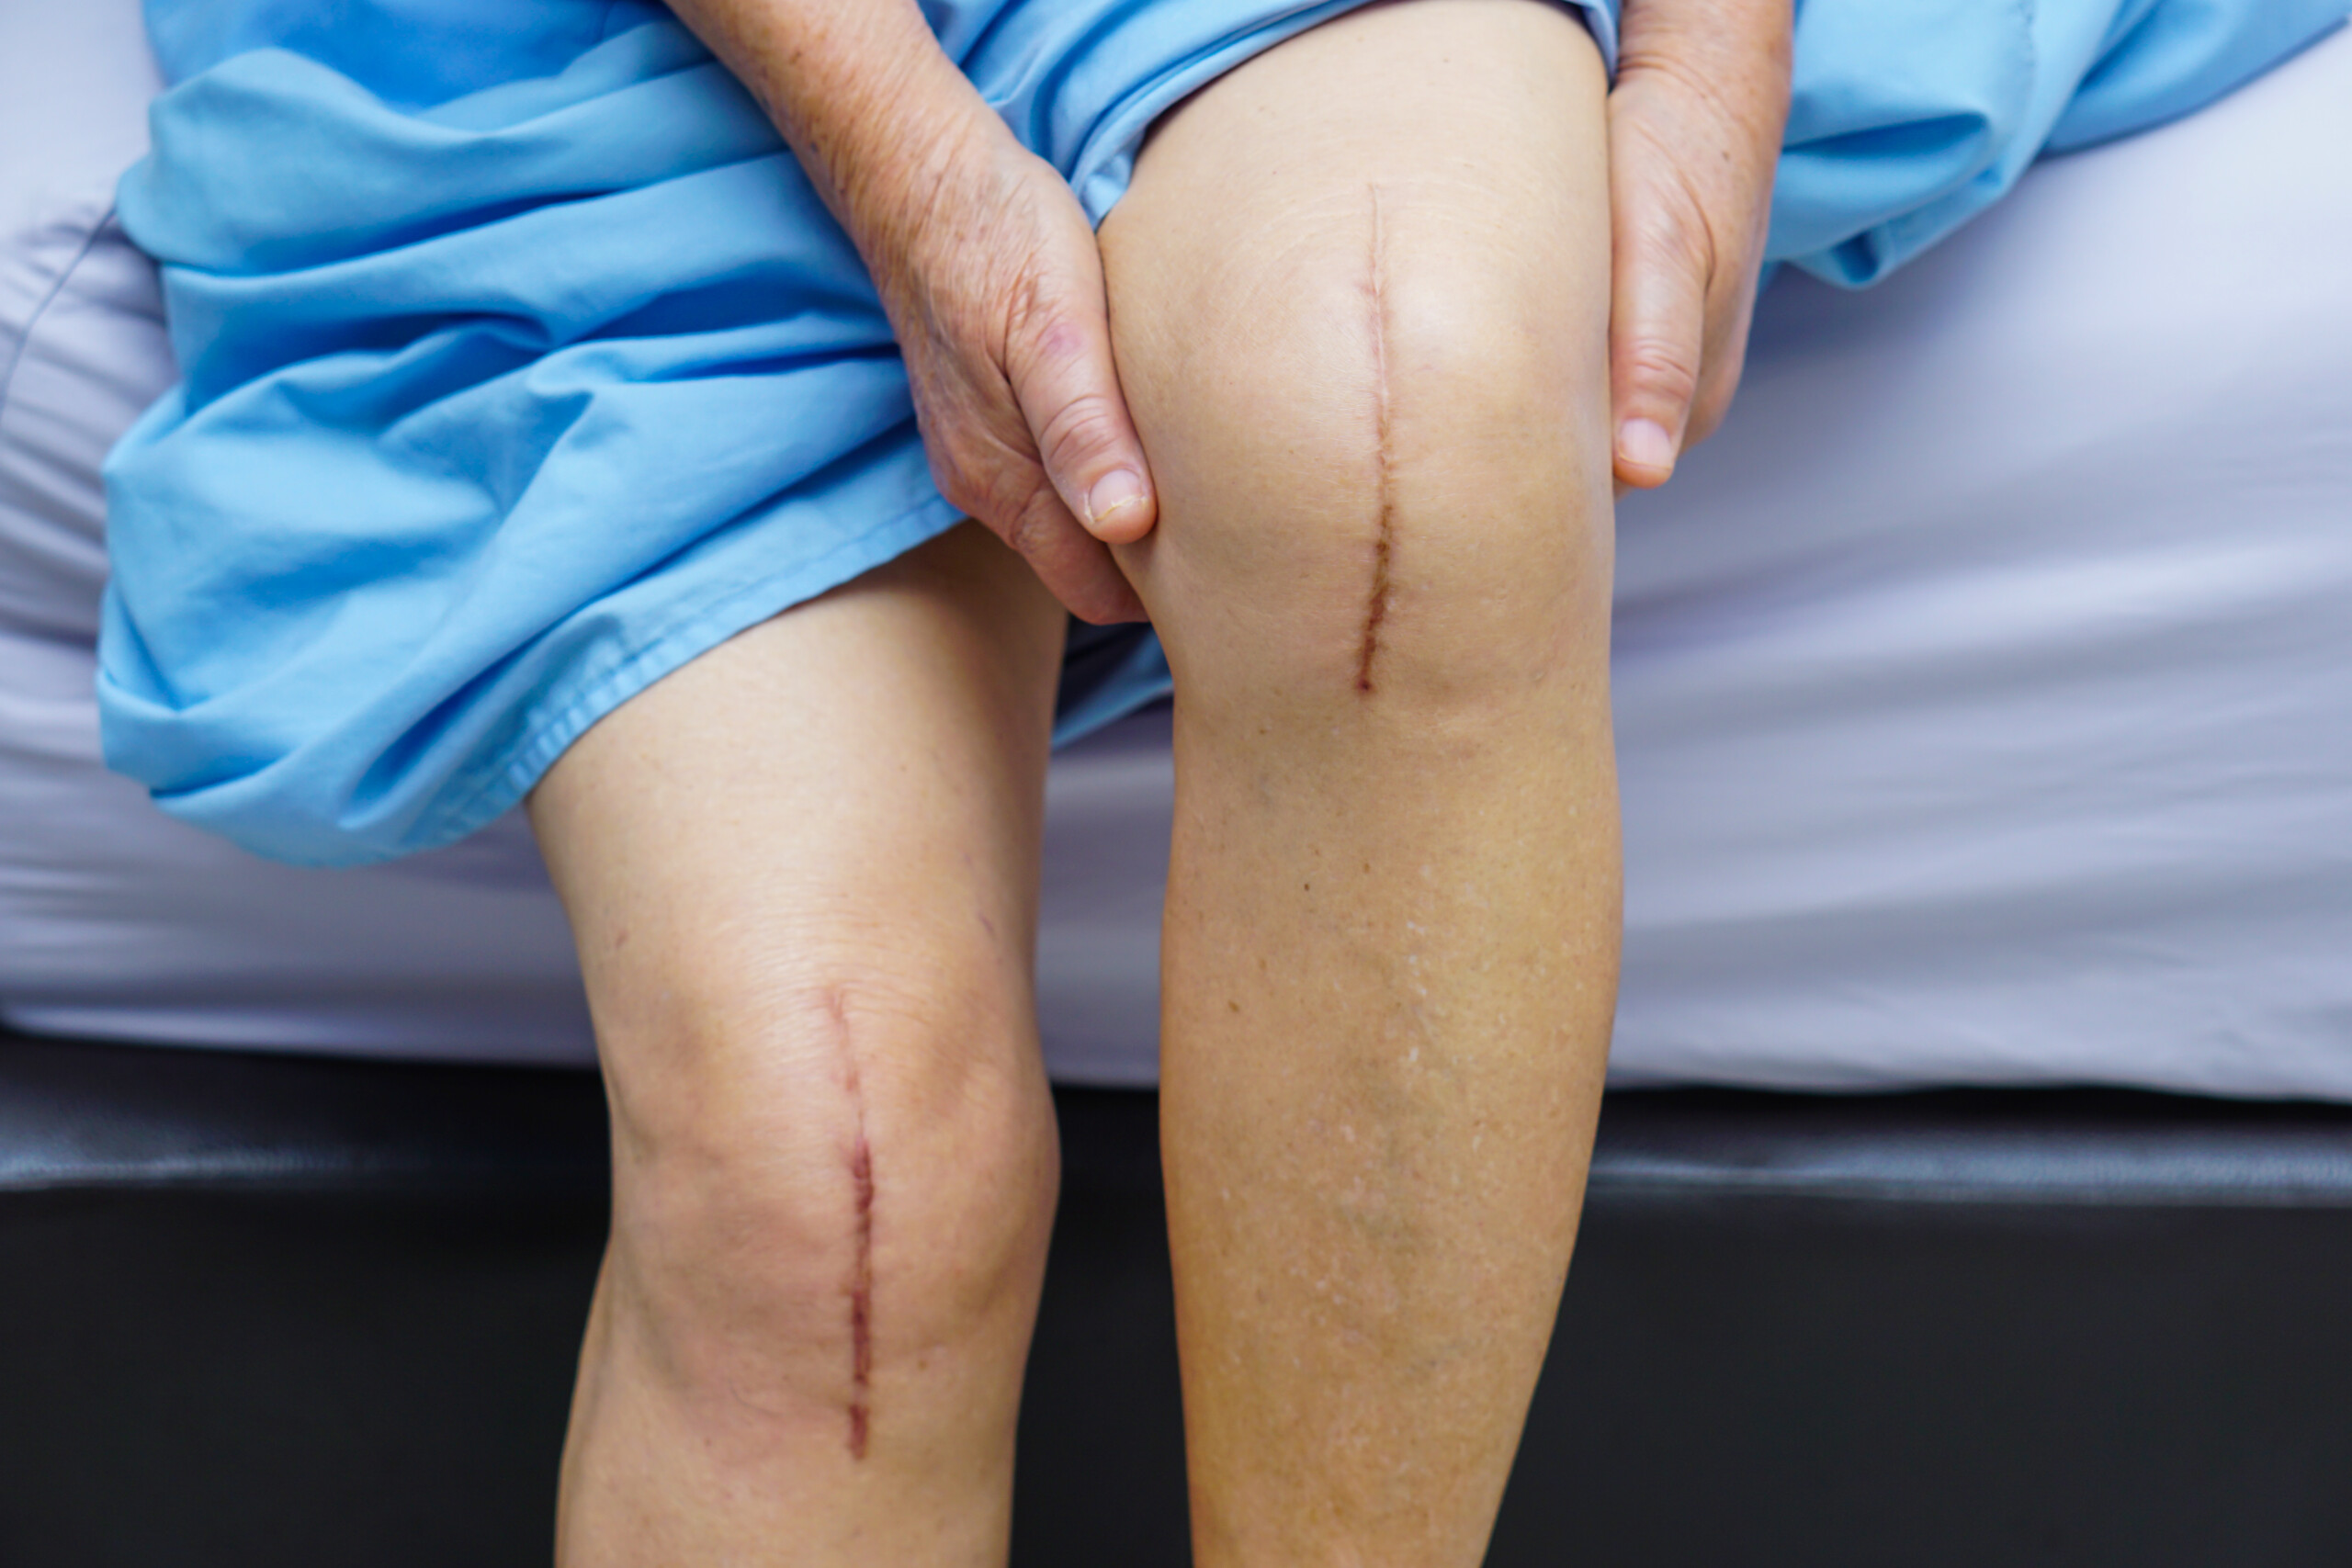 Knee Replacement DVT: Patients at Highest Risk?